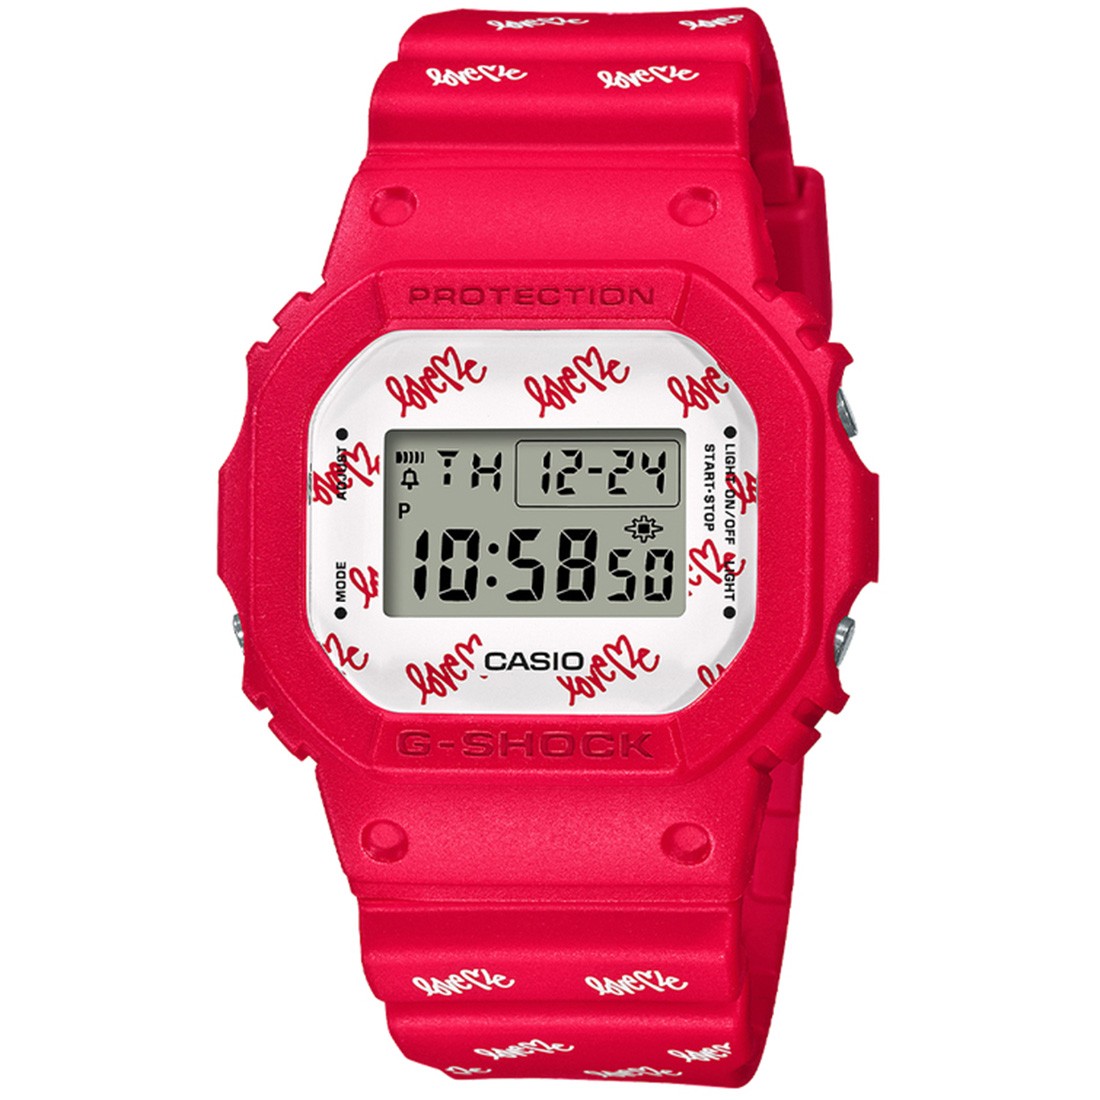 G-Shock Watches x Curtis Kulig DW5600LH-4 Watch (red)